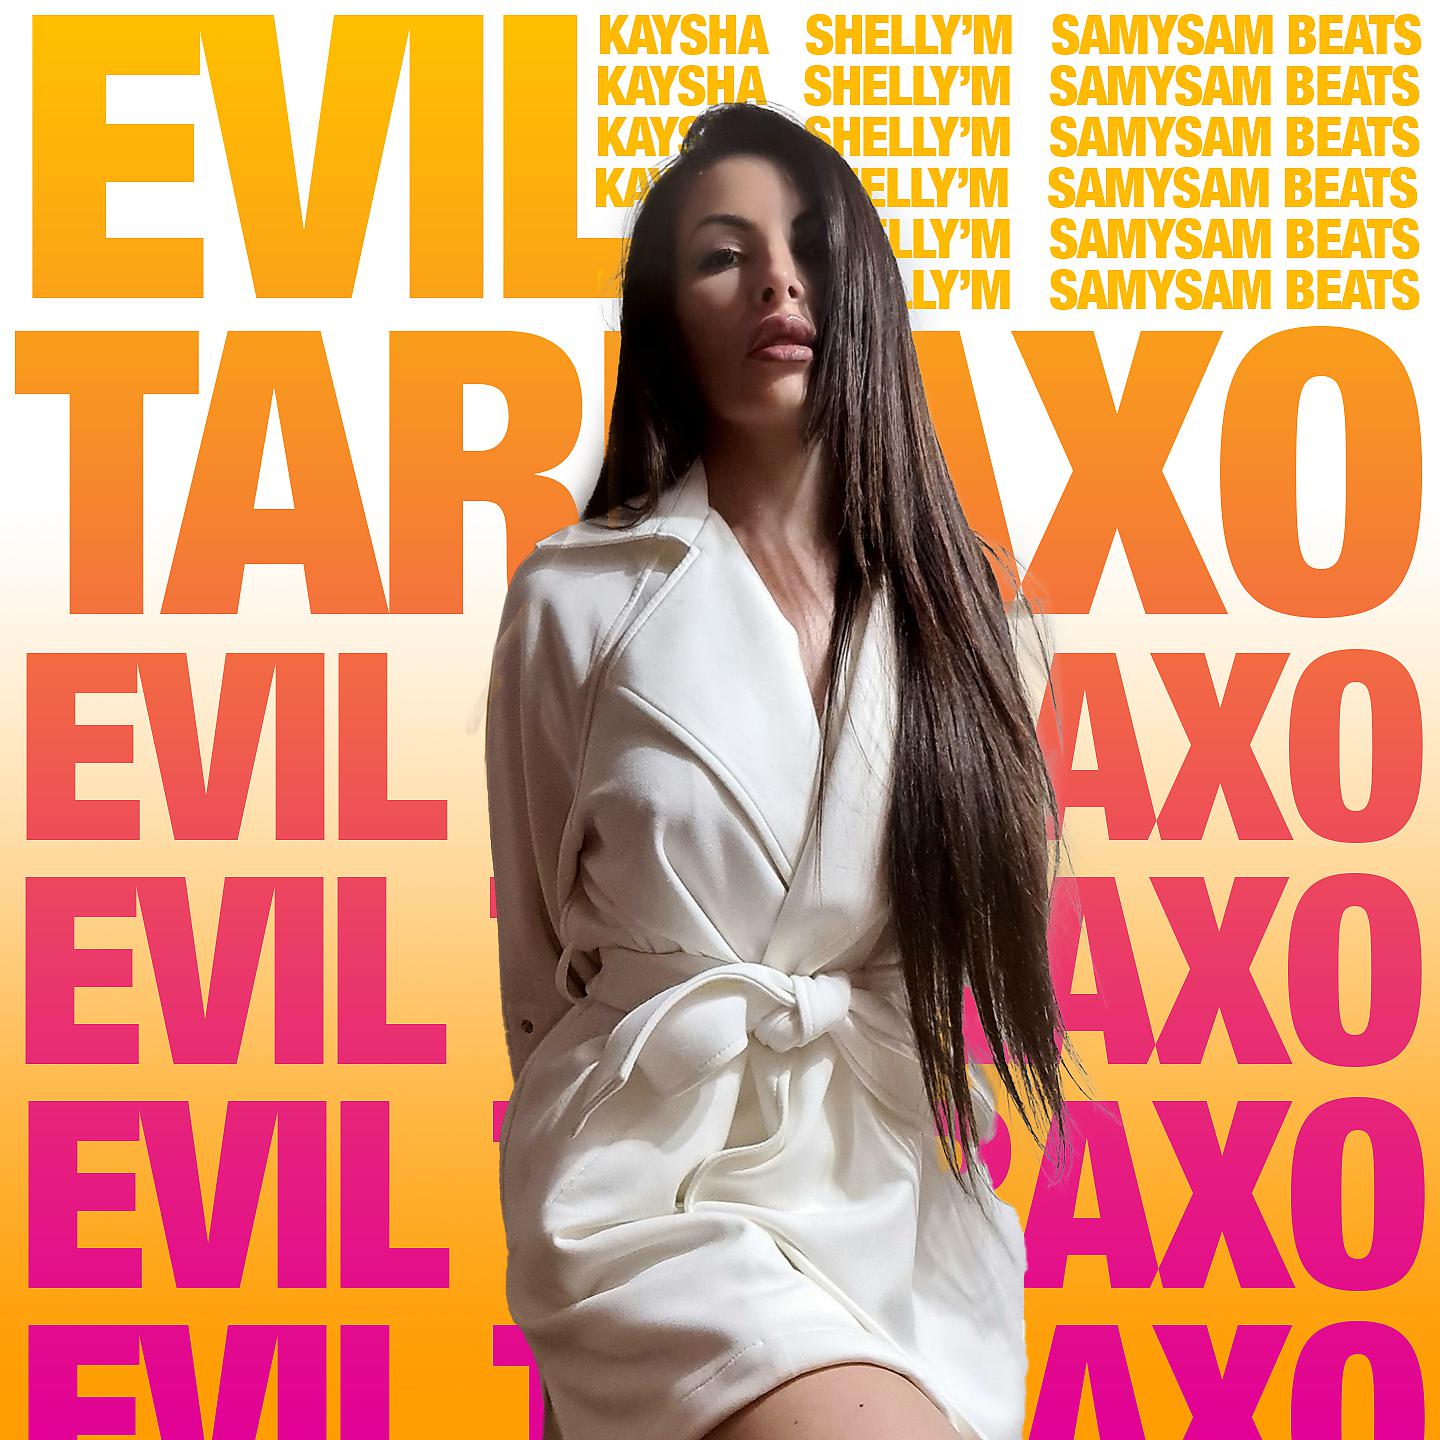 Постер альбома Evil Tarraxo